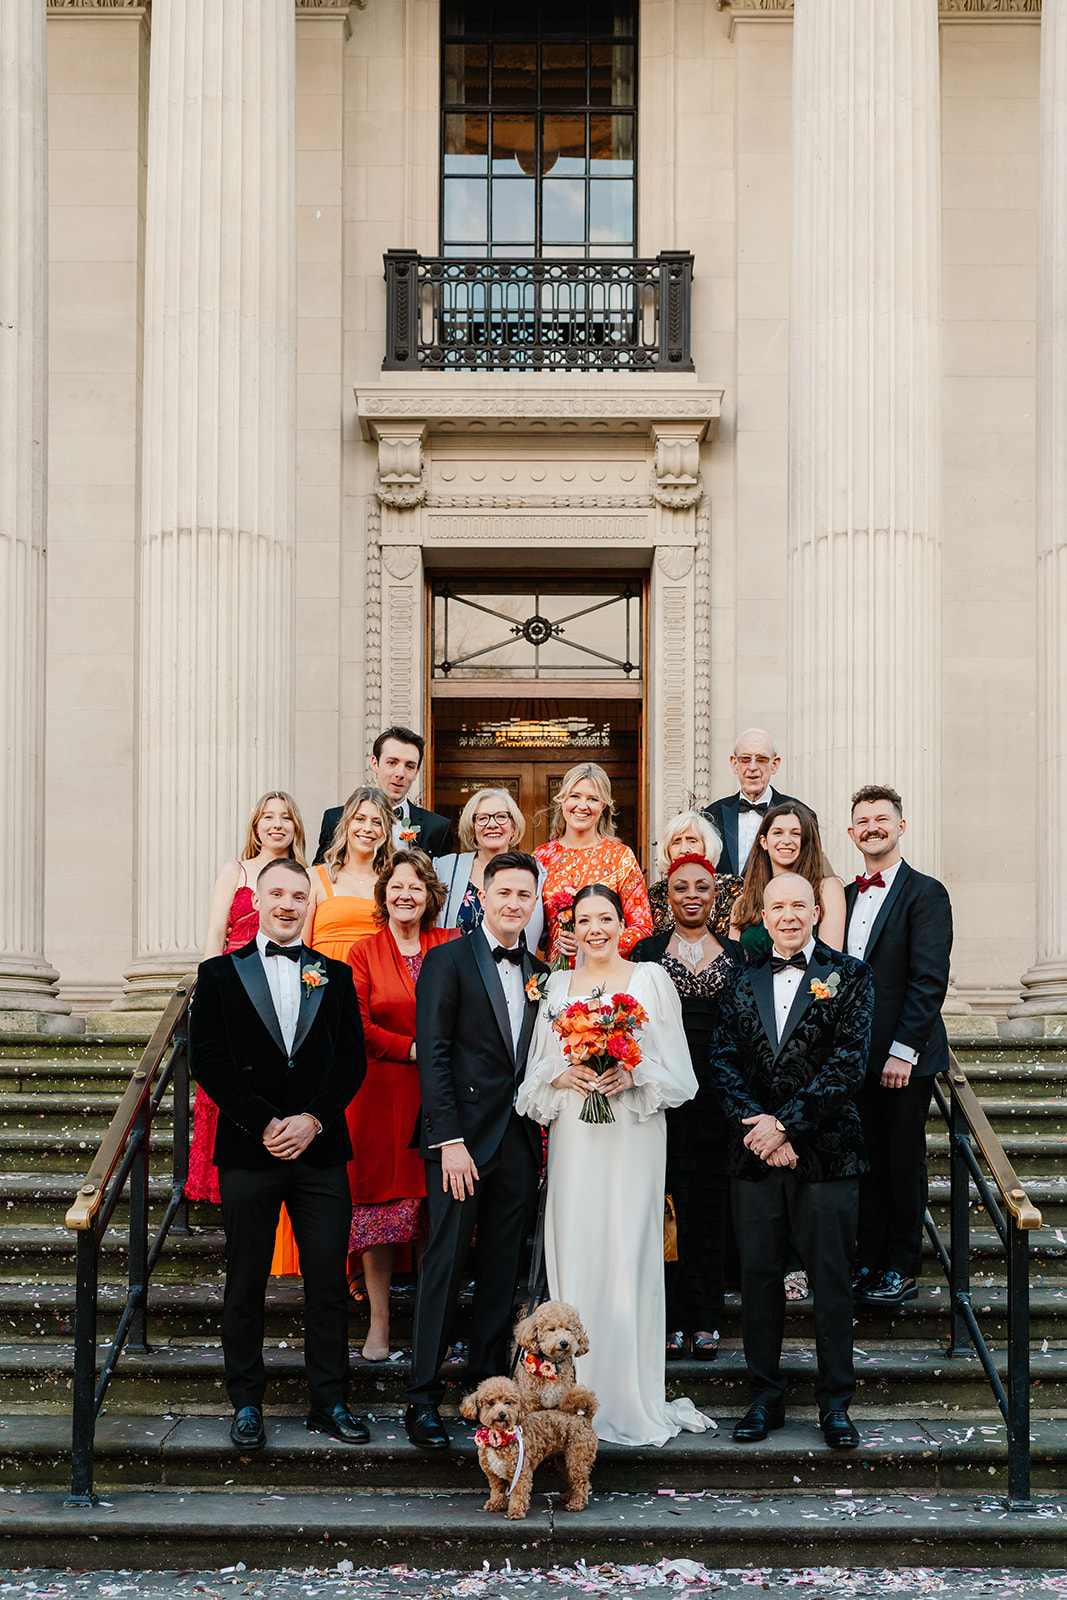 group photo outside Old Marylebone Town Hall | London wedding photographer